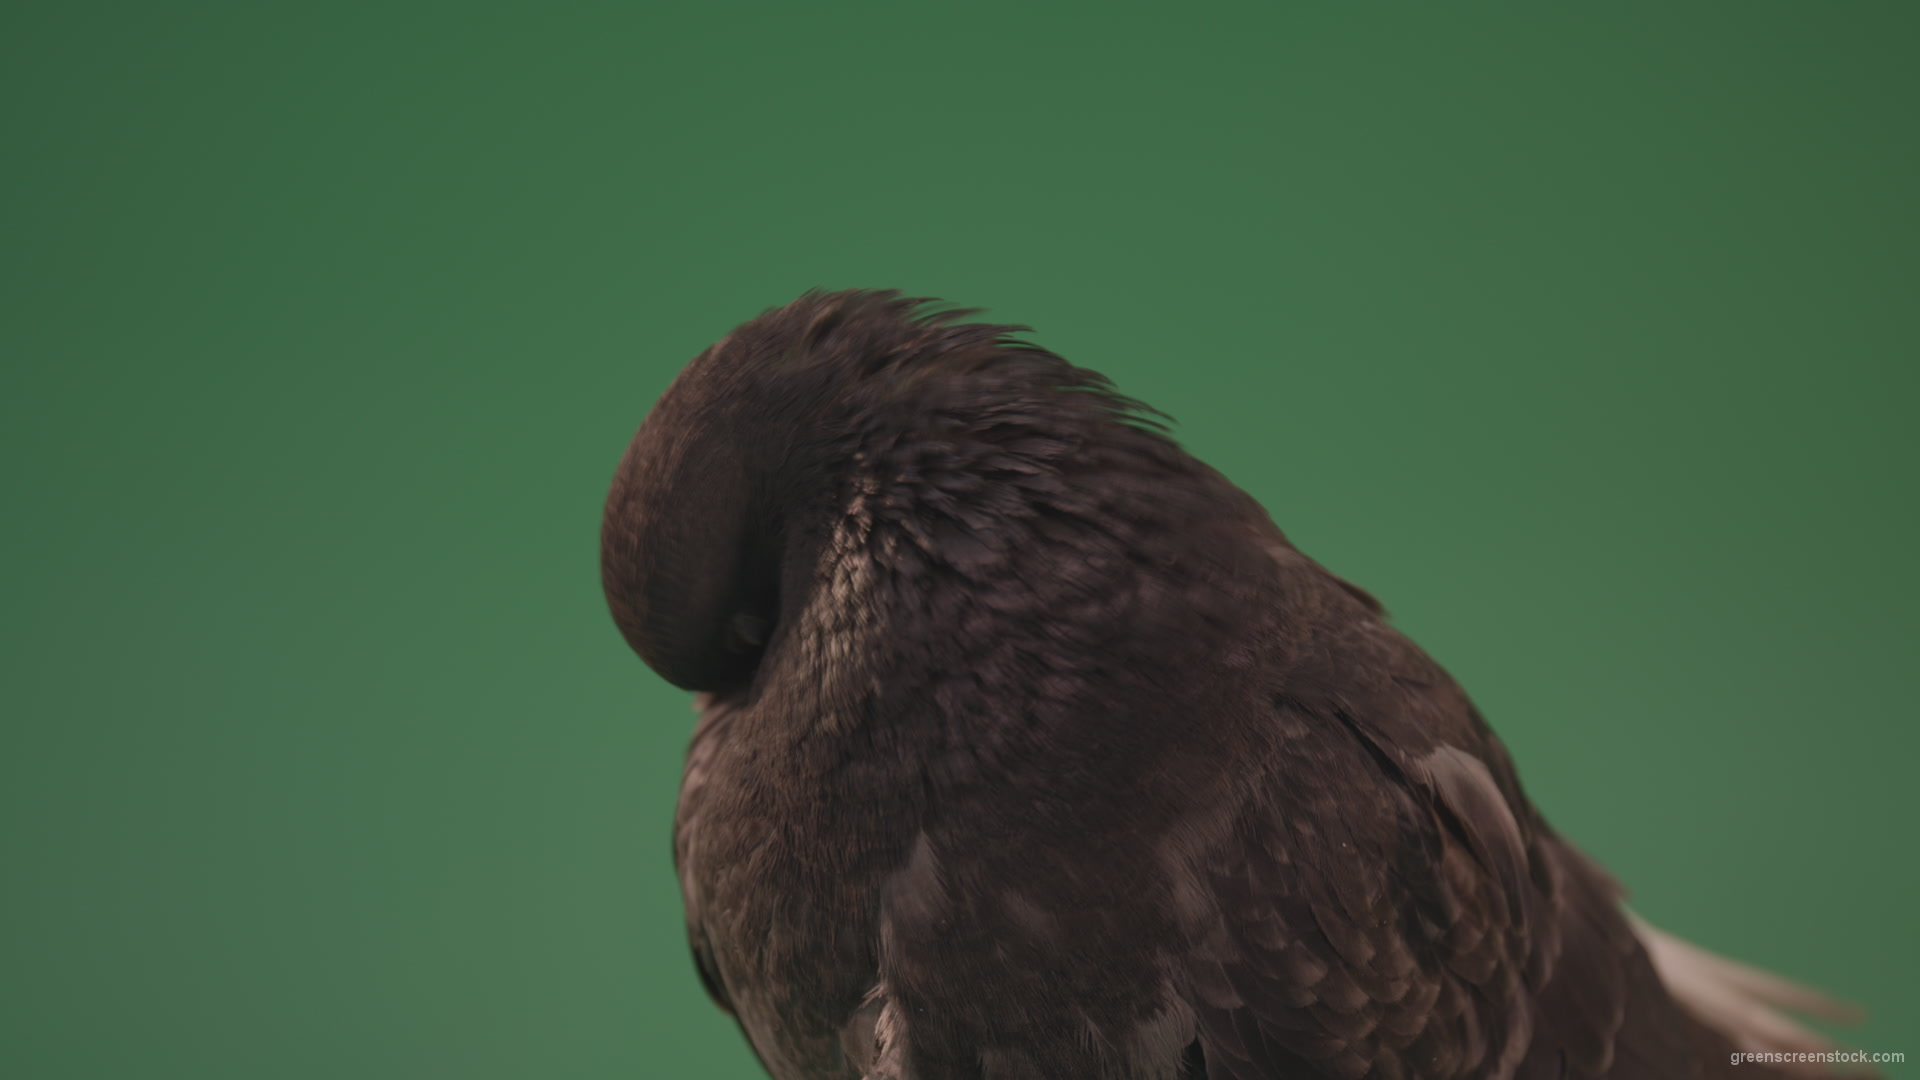 Gray-bird-of-mountain-origin-pigeon-strokes-its-lush-feathers-isolated-in-green-screen-studio_001 Green Screen Stock